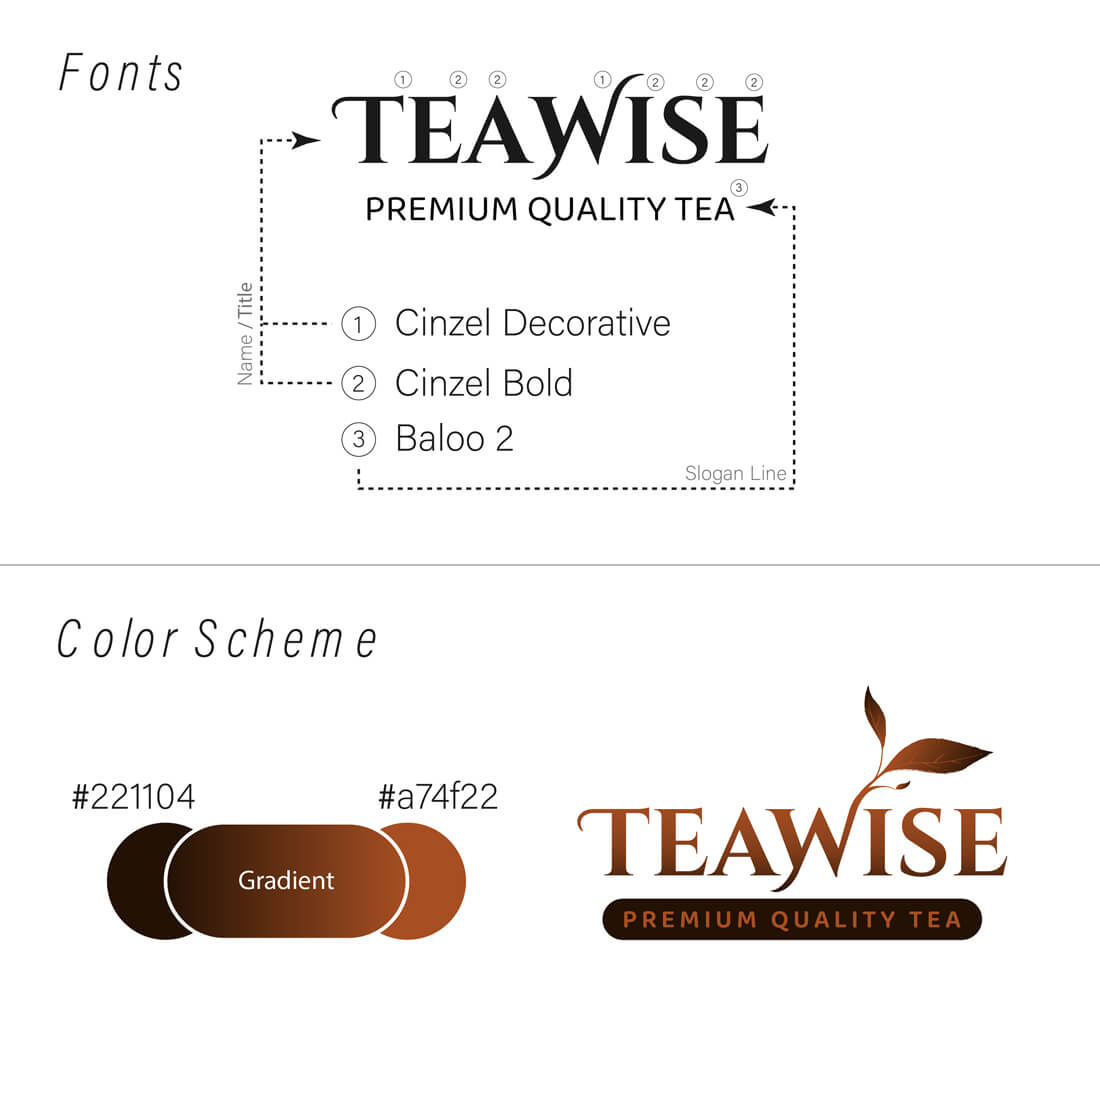 Tea Company Logo Design - TeaWise Logo Template cover image.